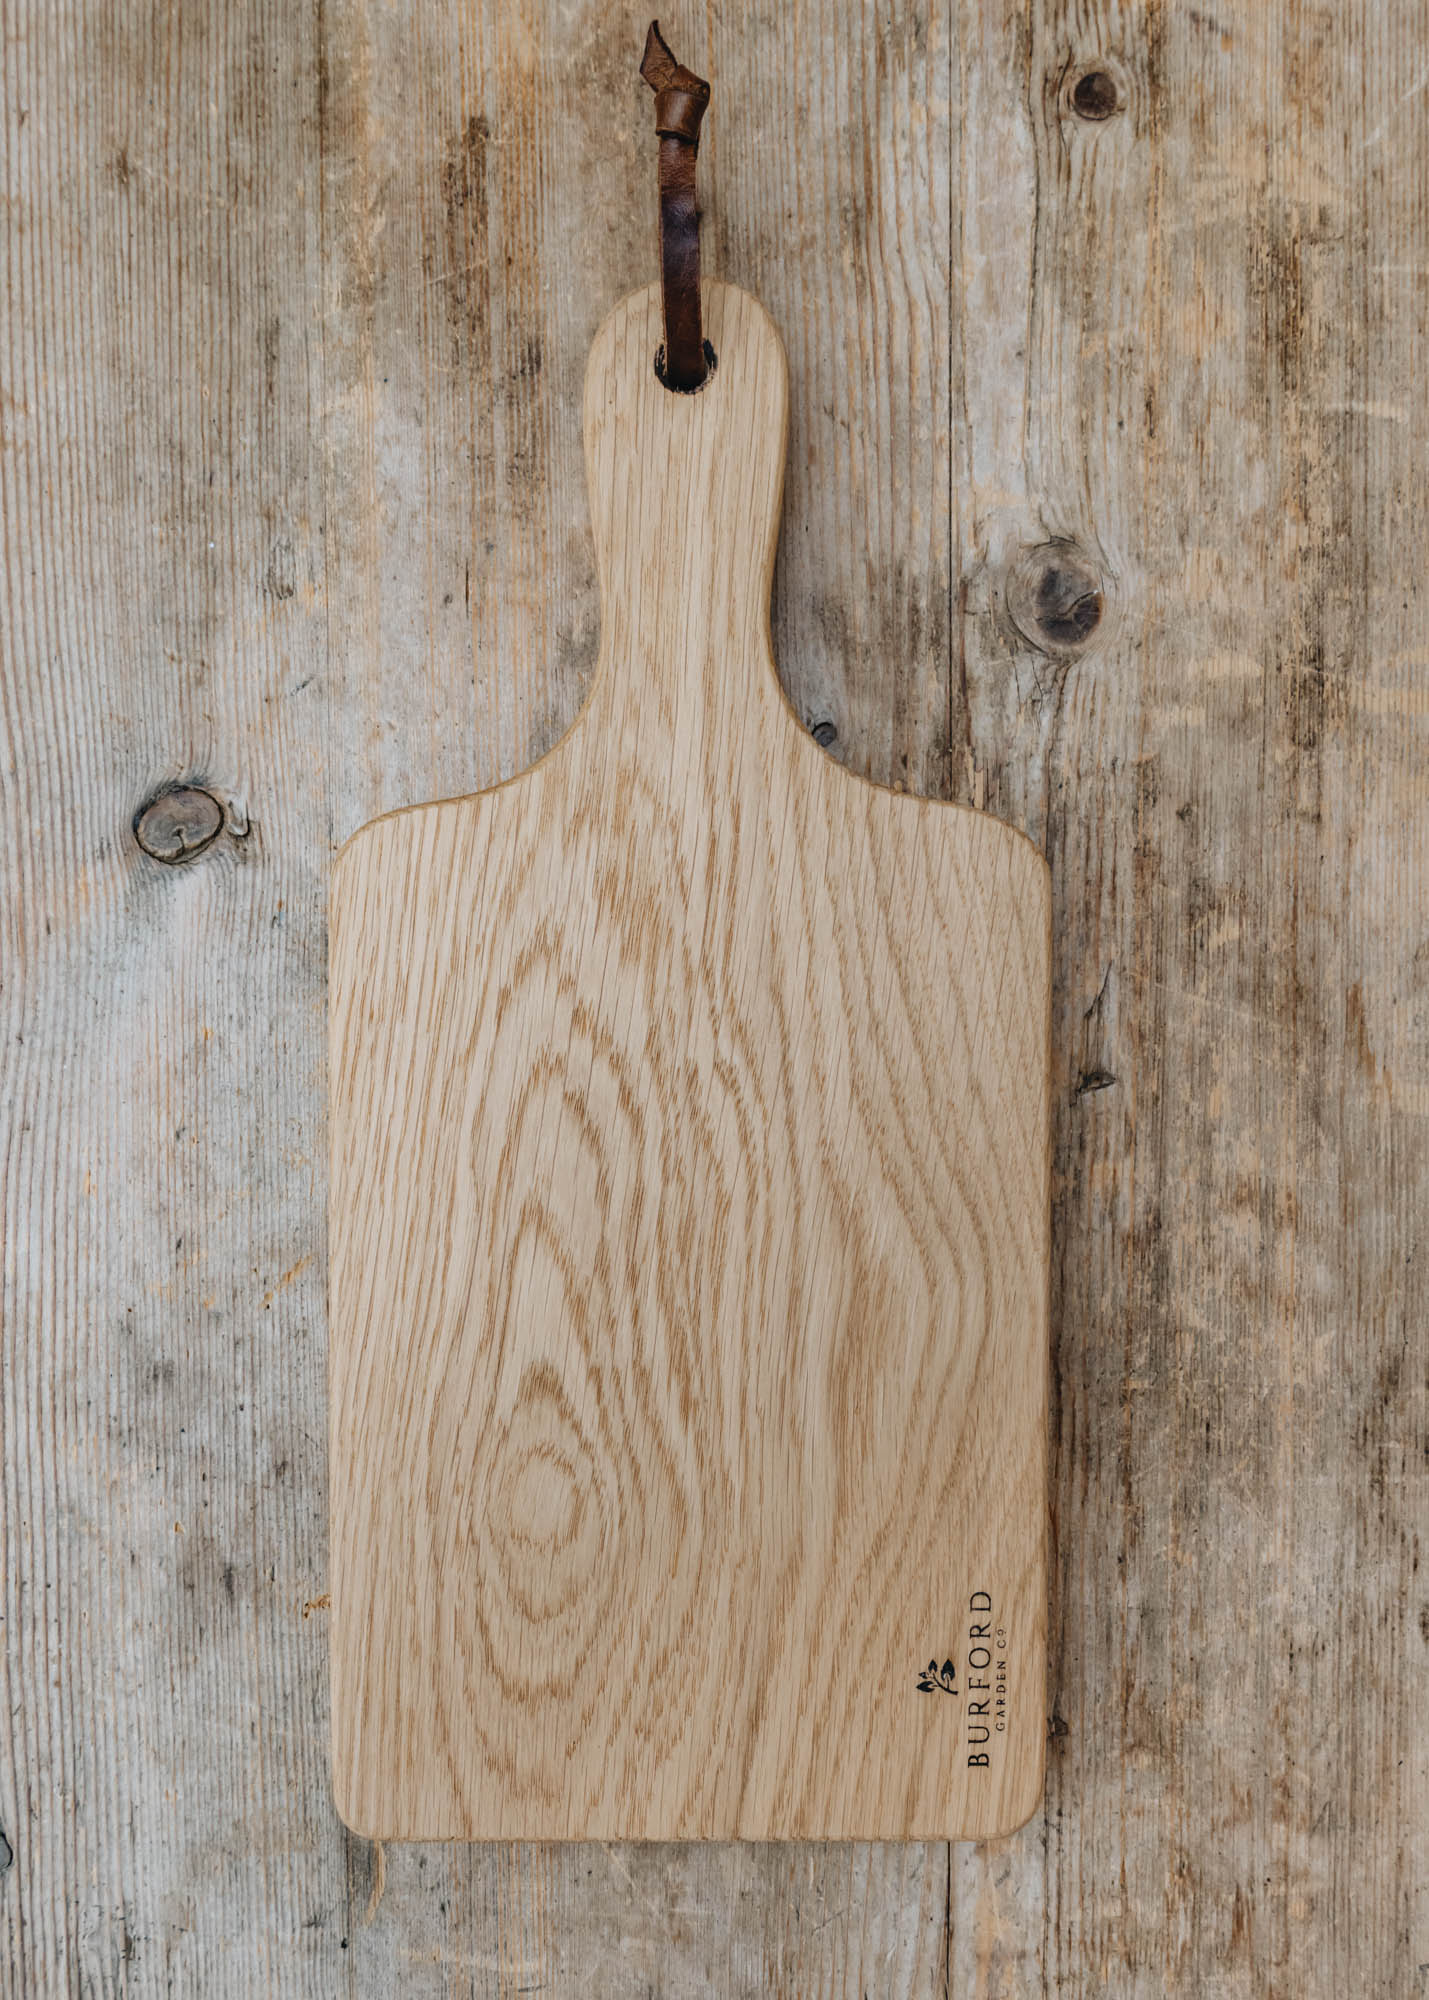 STIK Designs Small Oak Chopping Board with Handle